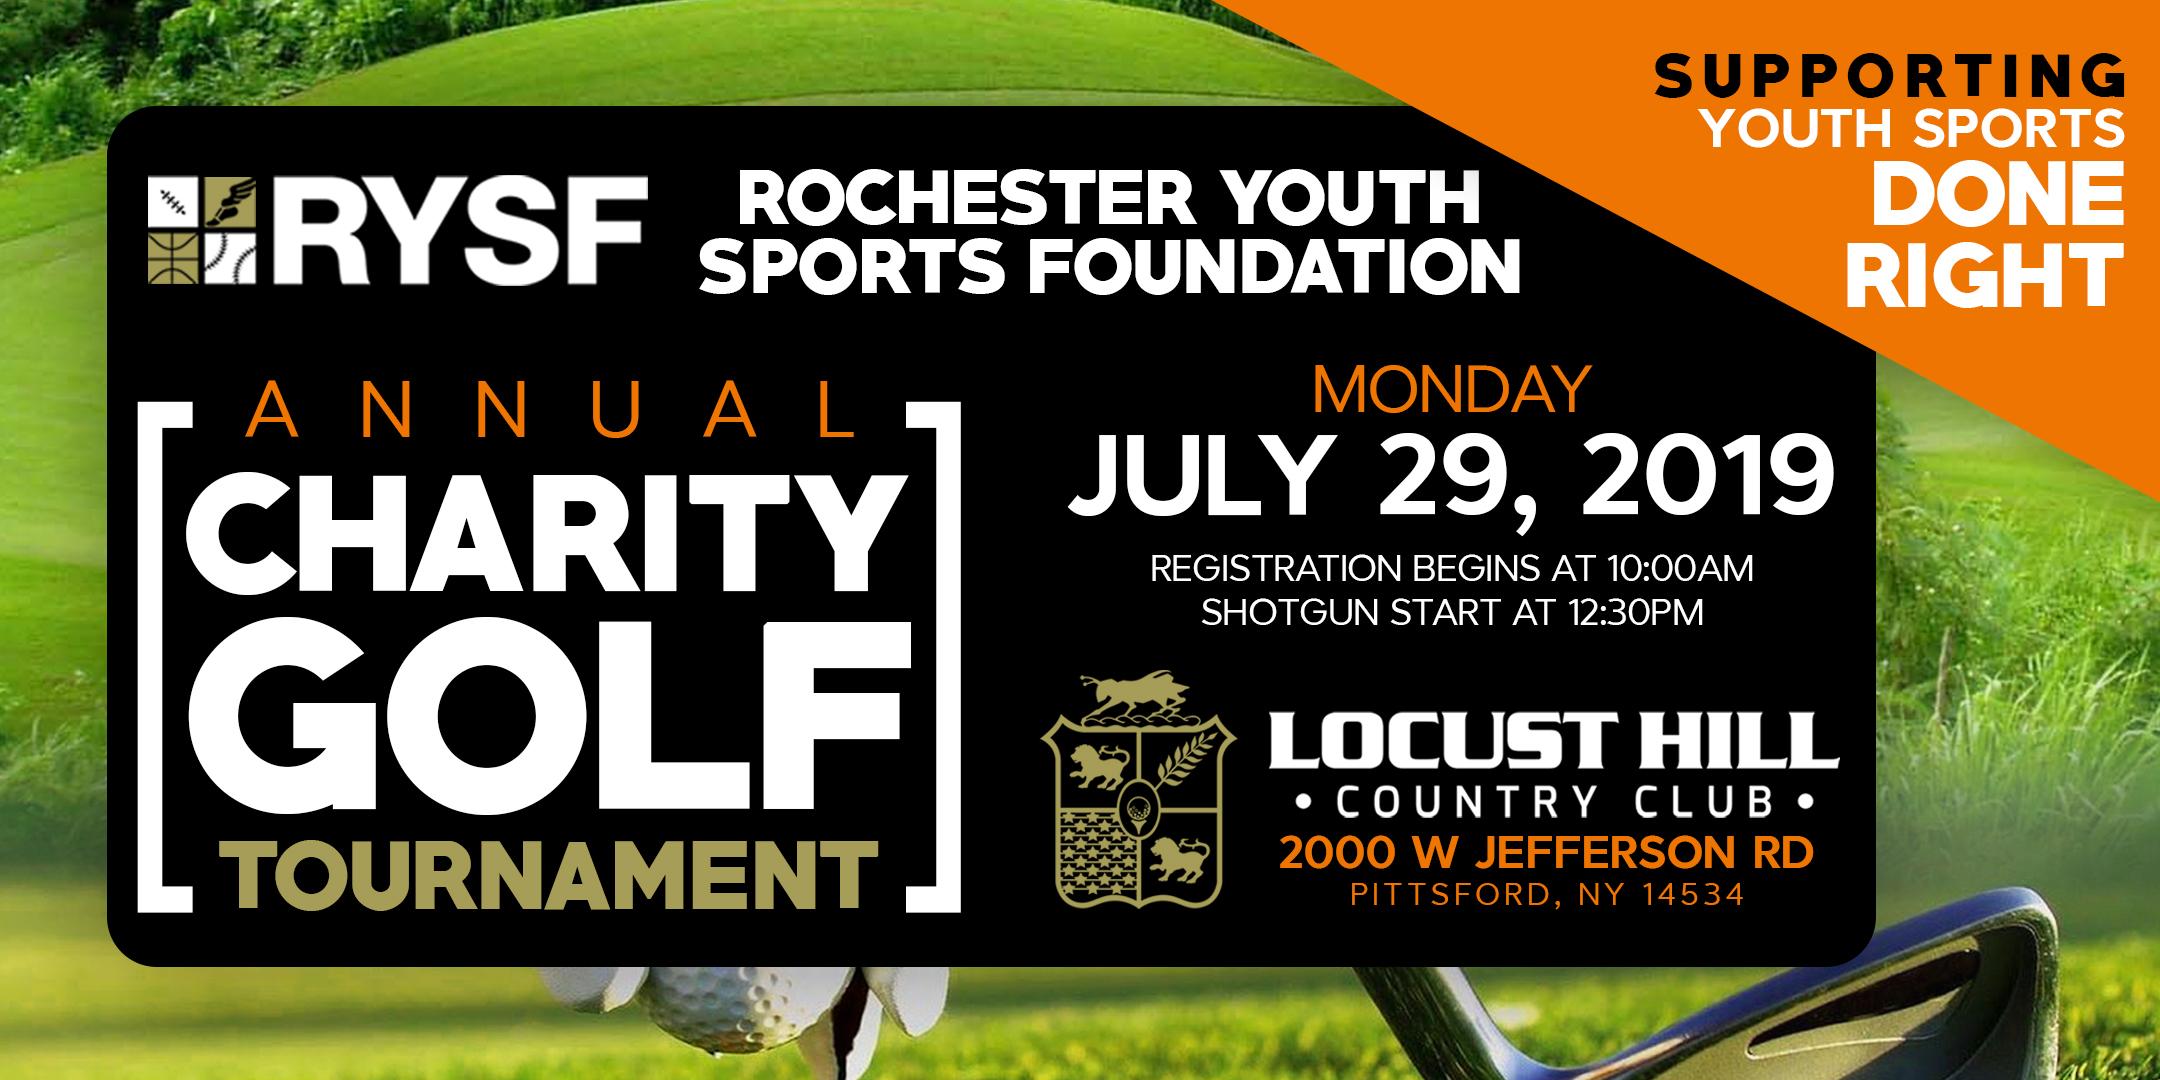 RYSF Annual Charity Golf Tournament